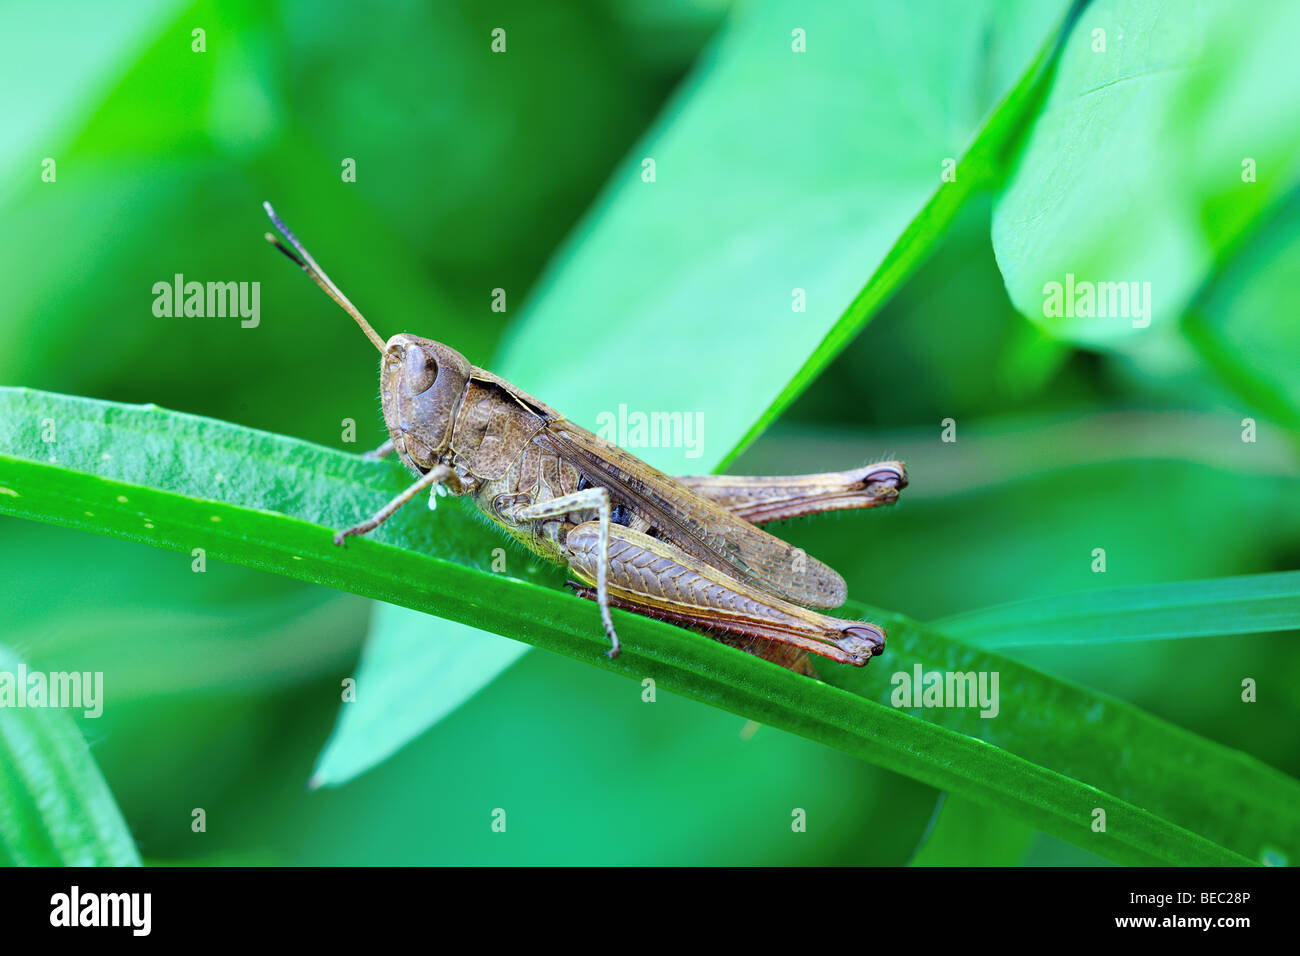 Adult male common field grasshopper (chorthippus brunneus) on a blade of grass Stock Photo